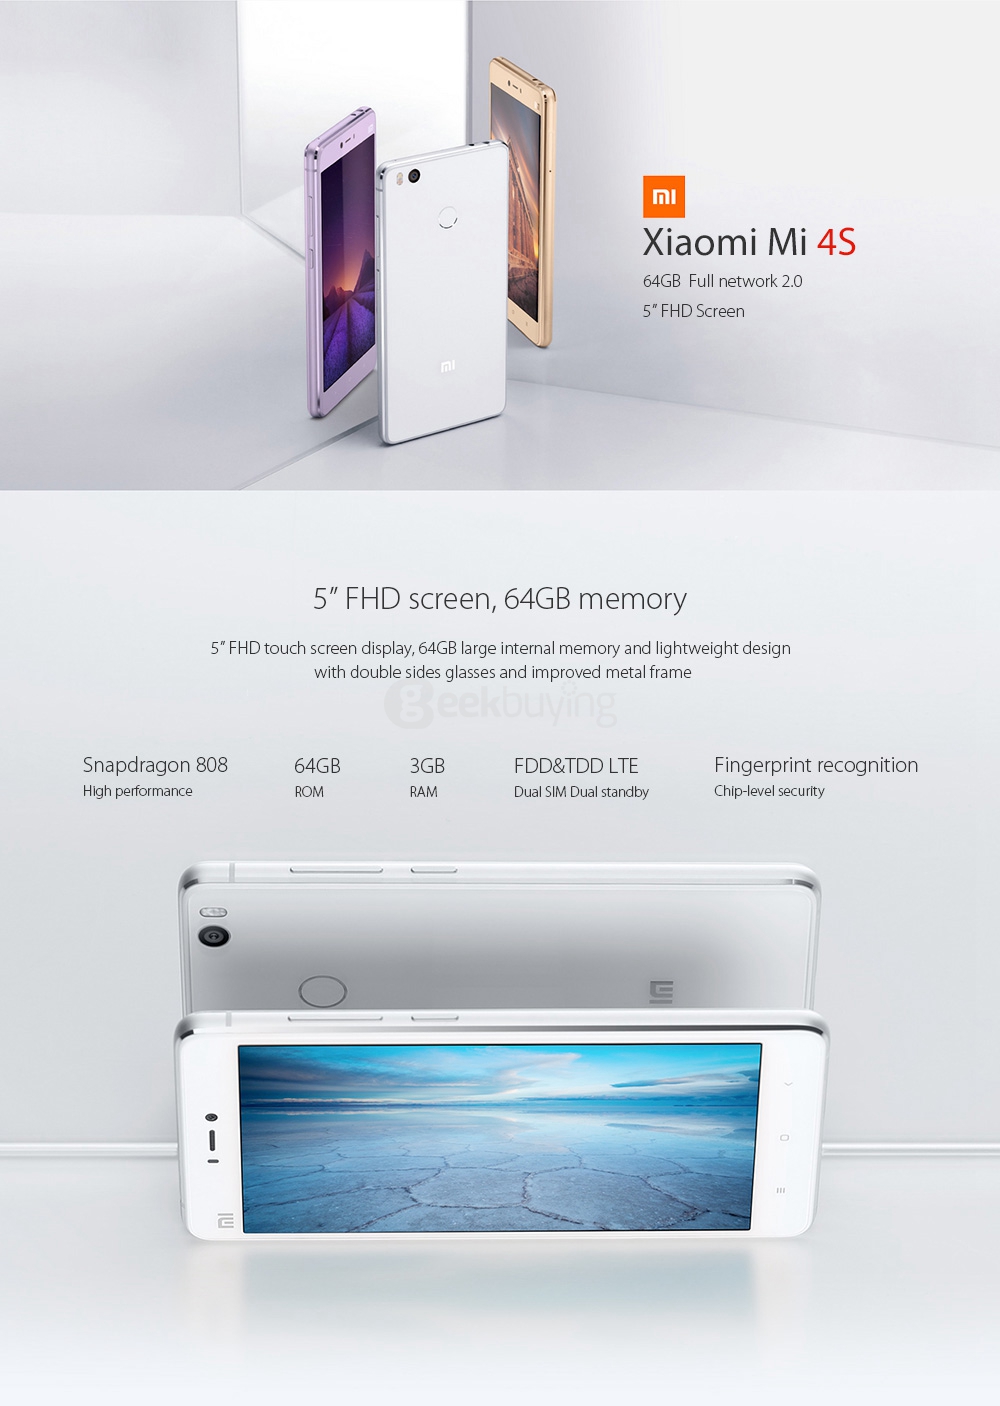 Xiaomi Mi4S /Mi 4S 4G LTE 5.0inch FHD MIUI 7.2 OS 3GB 64GB Smartphone 64-bit Snapdragon 808 Hexa Core 13.0MP Touch ID Type-C QC2.0 - Black